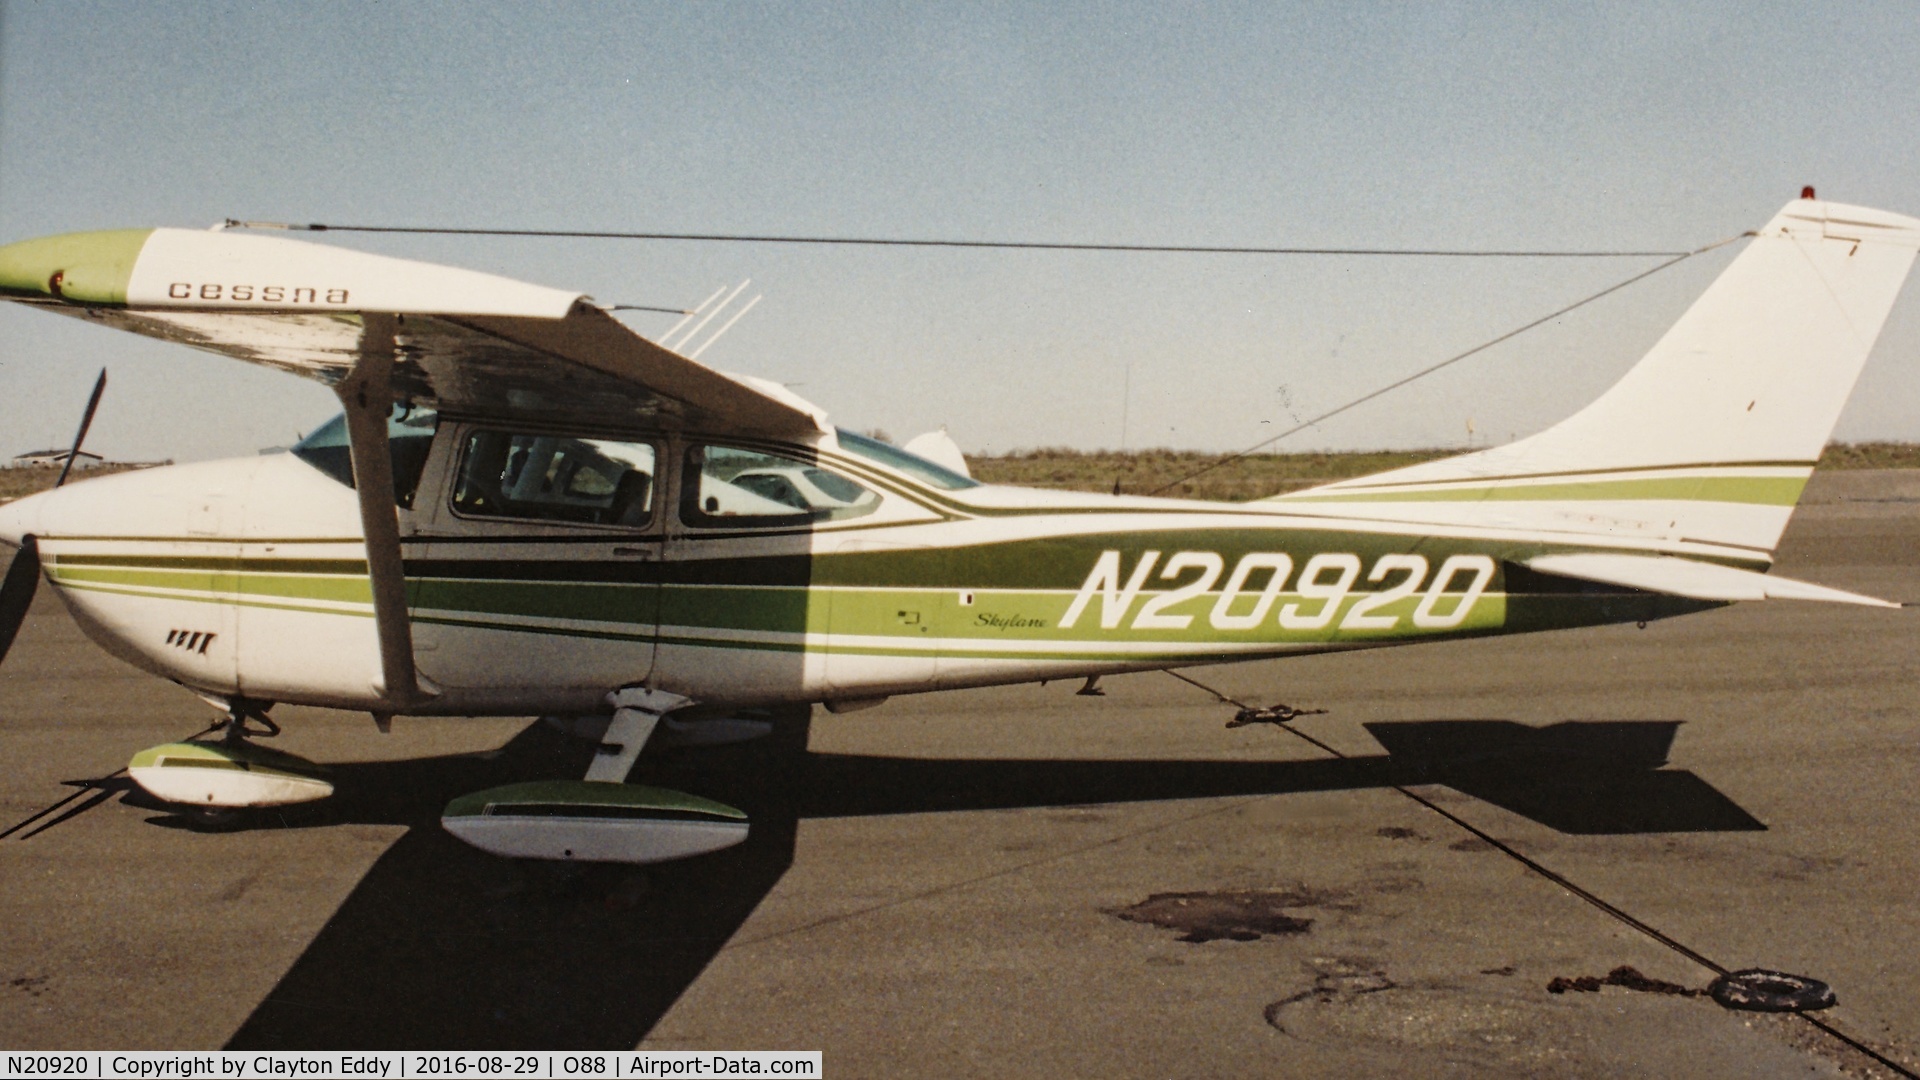 N20920, 1972 Cessna 182P Skylane C/N 18261295, N20920 at the Rio Vista airport. HF antenna's installed.